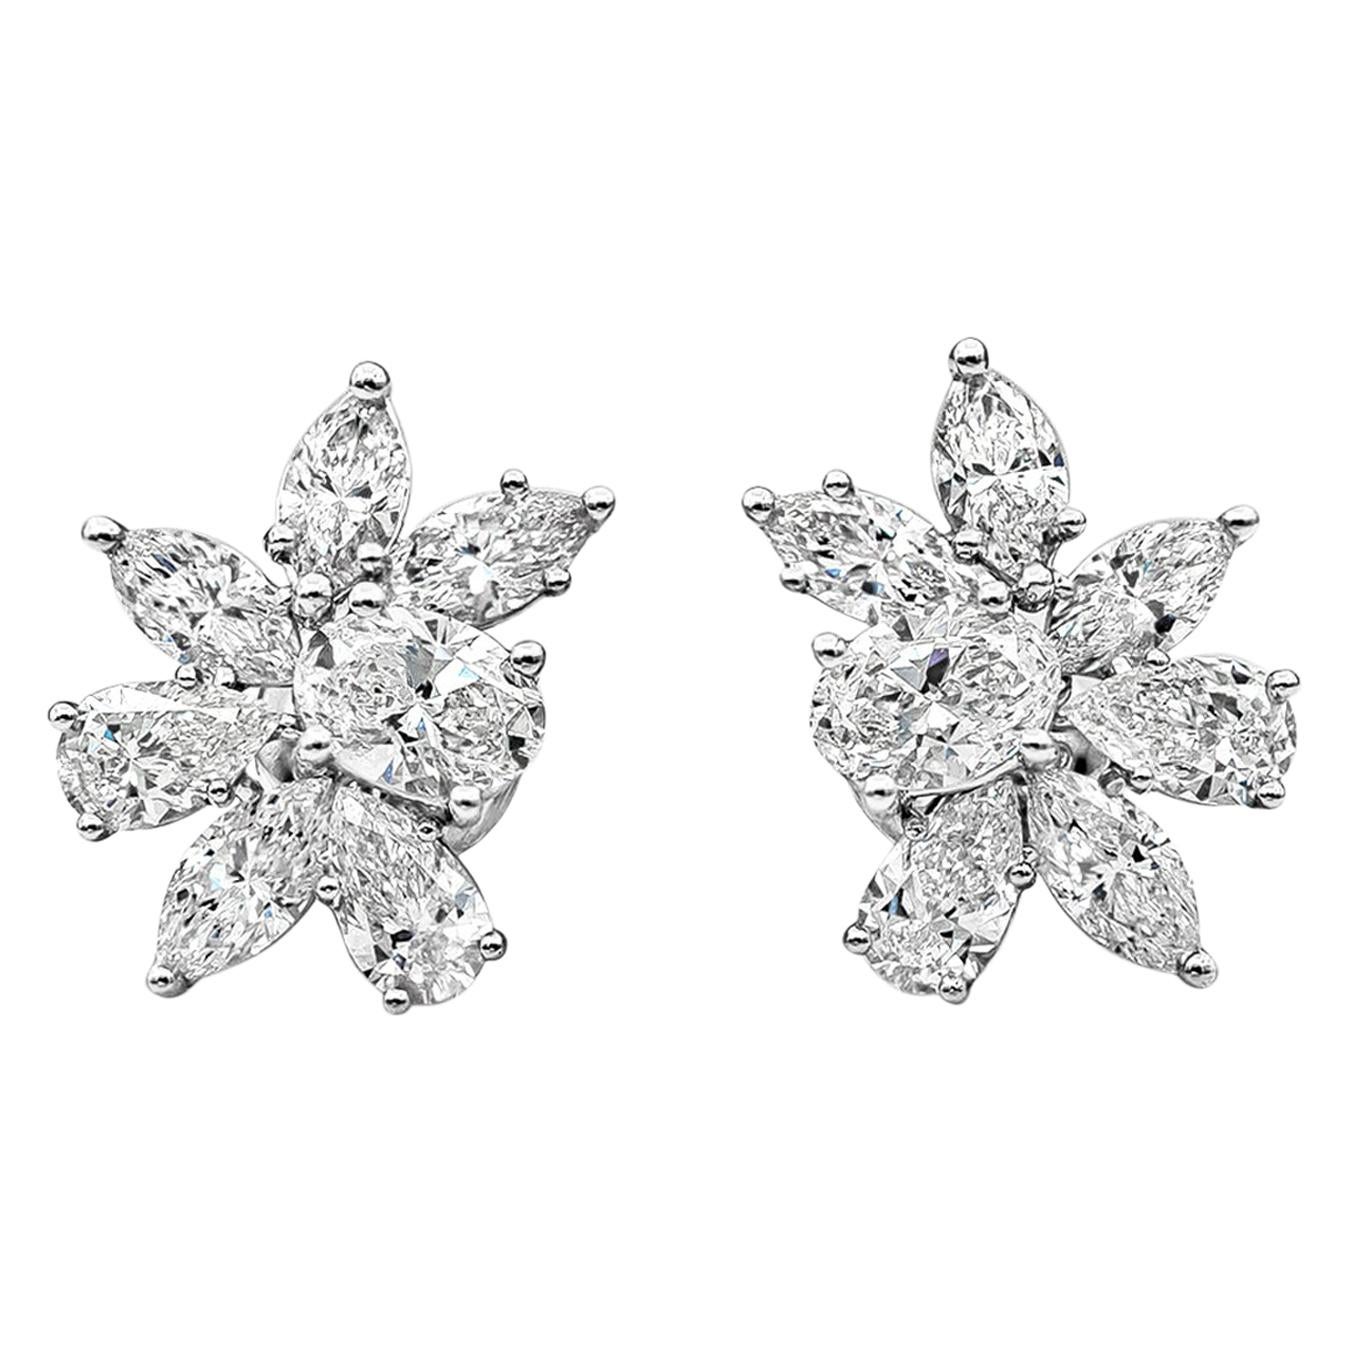 Roman Malakov 3.80 Carat Pear and Oval Cut Diamonds Cluster Stud Earrings